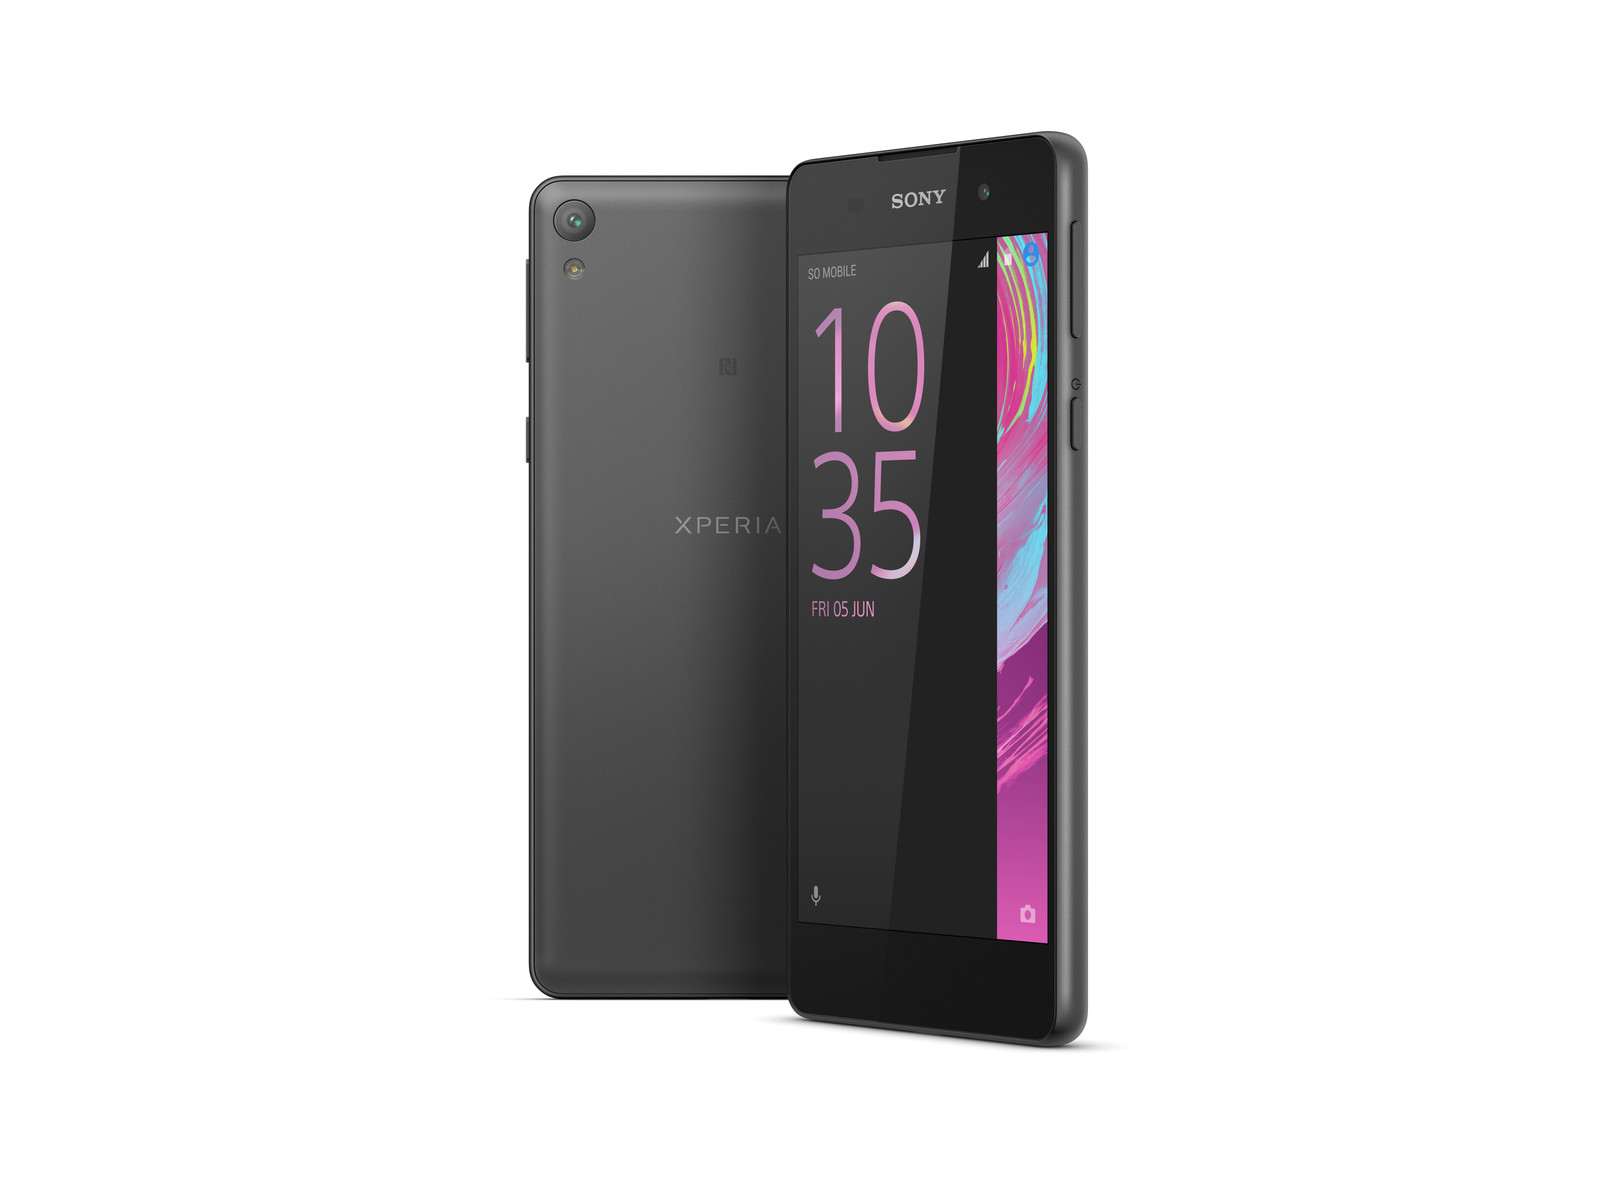 misericordia embudo Inmersión Sony Xperia E5 Smartphone Review - NotebookCheck.net Reviews